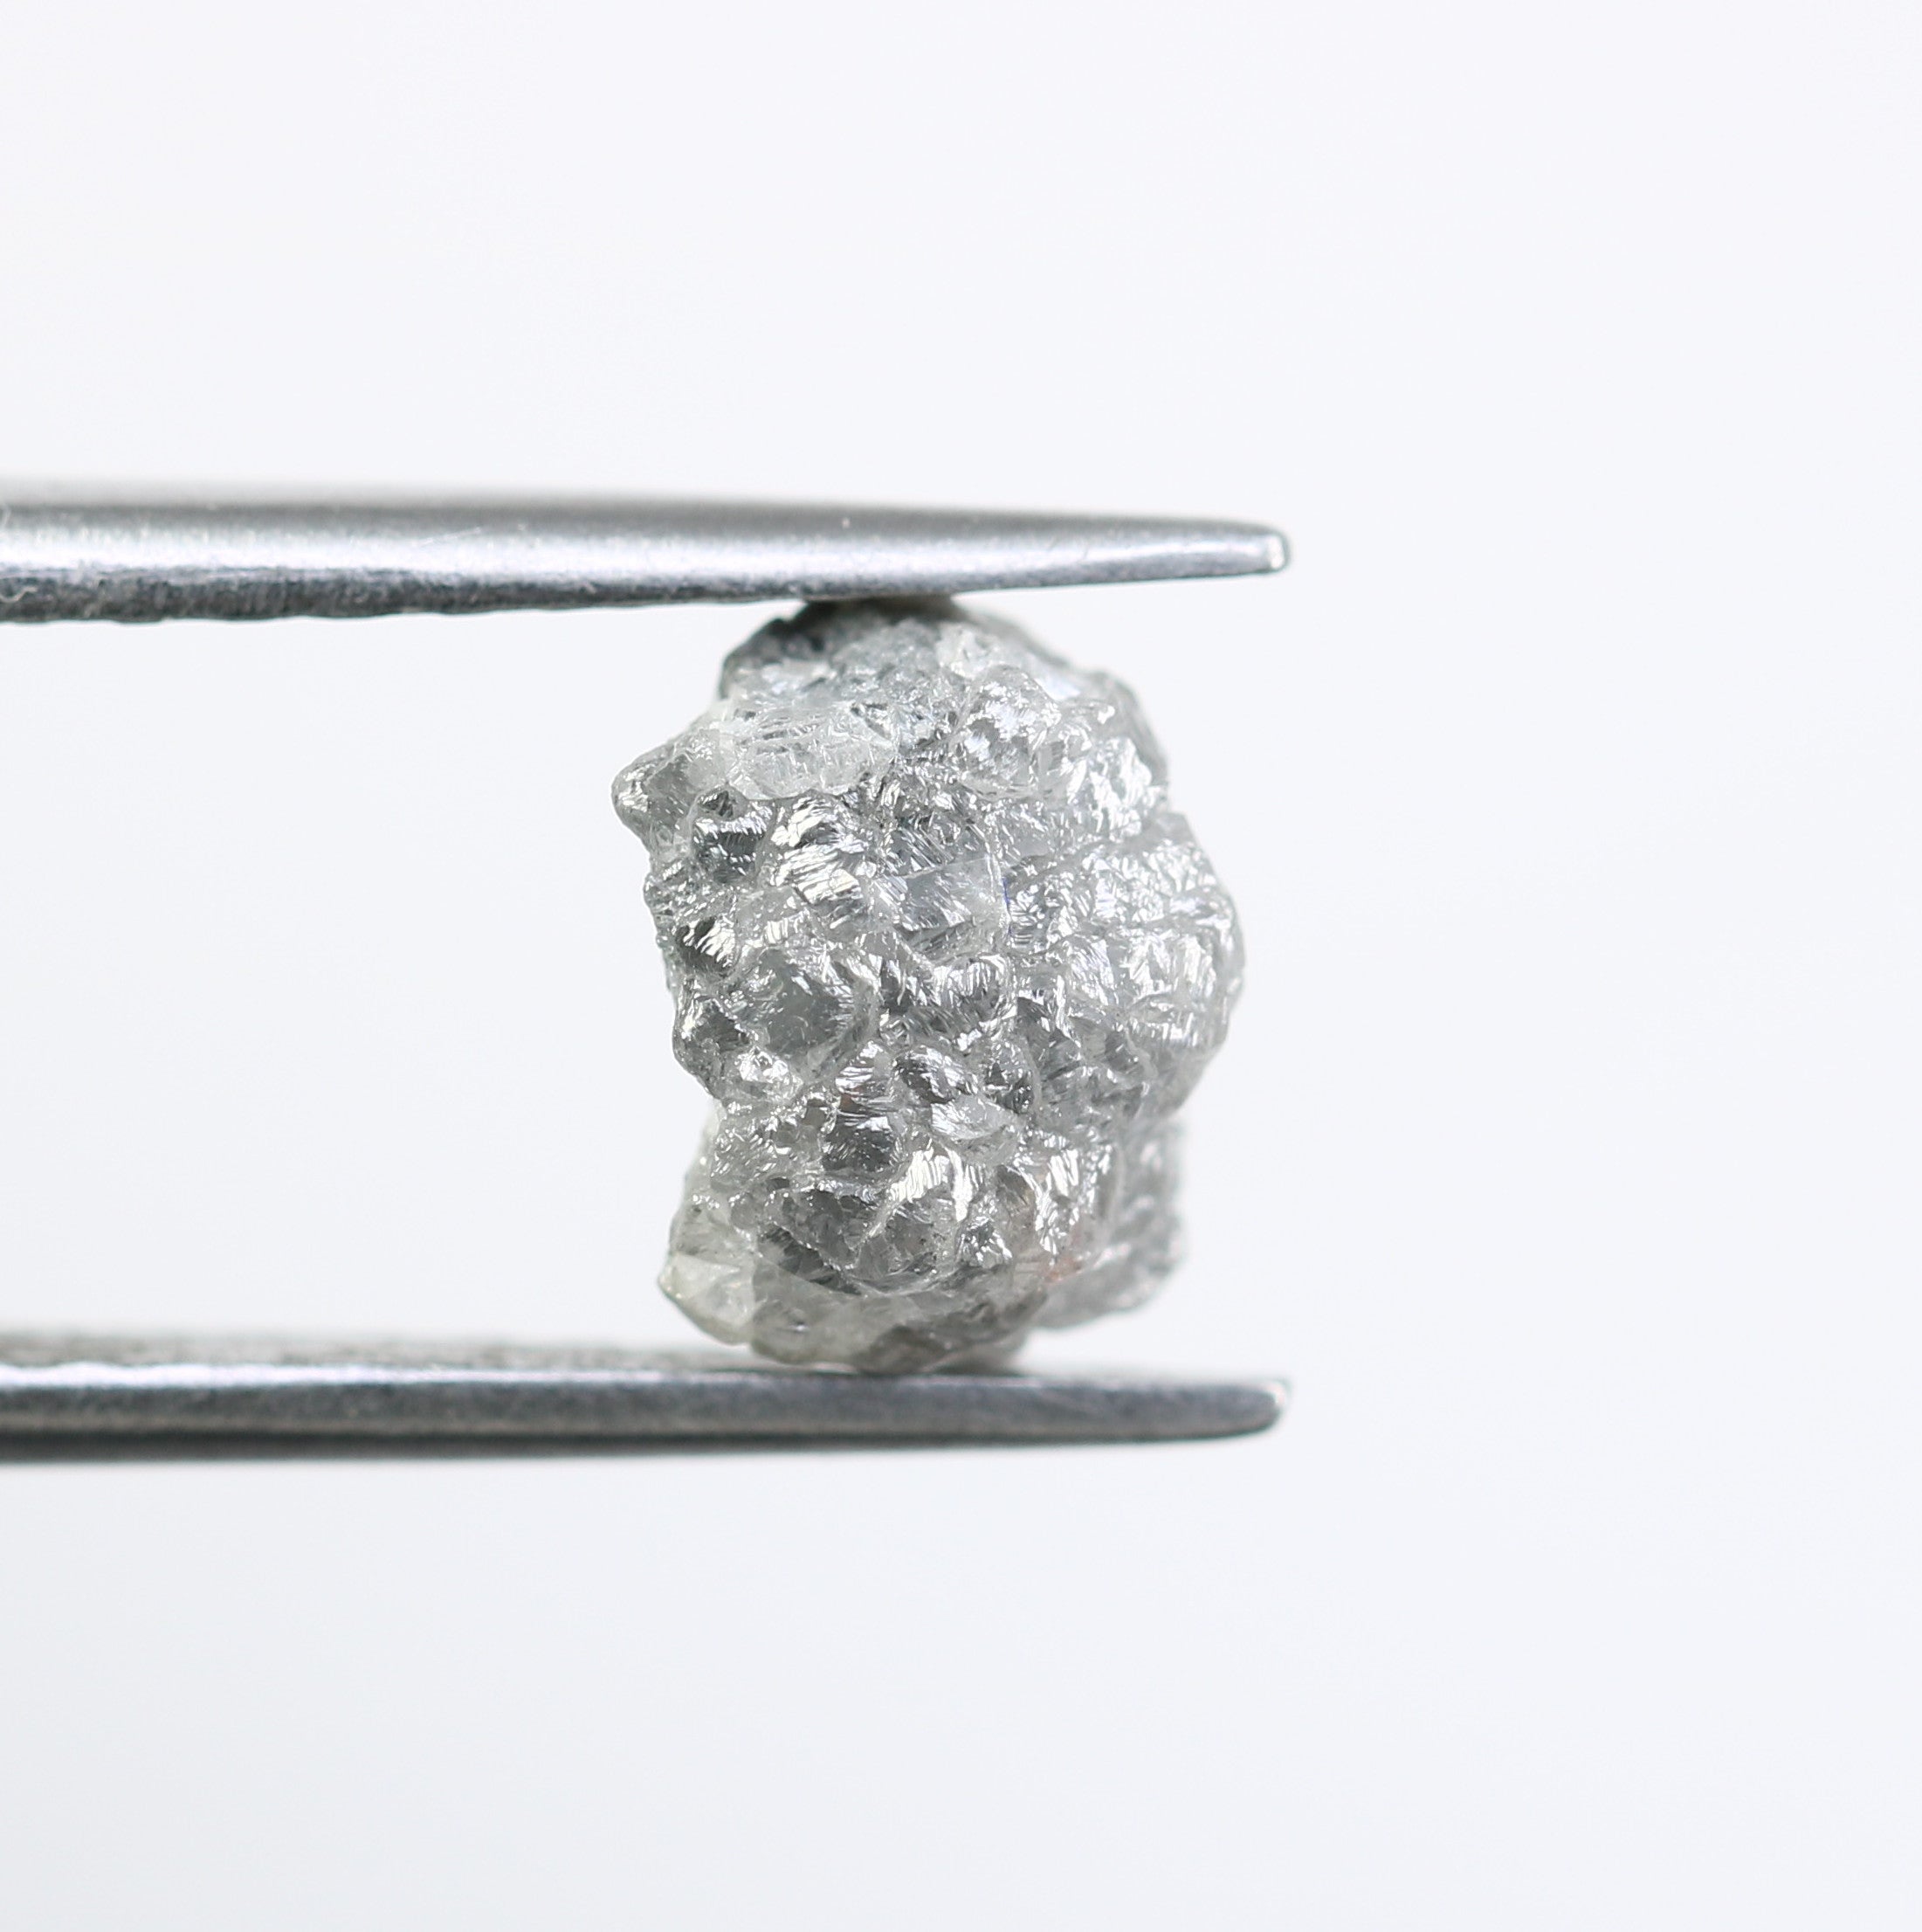 2.56 CT Rough Grey Irregular Cut Diamond For Engagement Ring